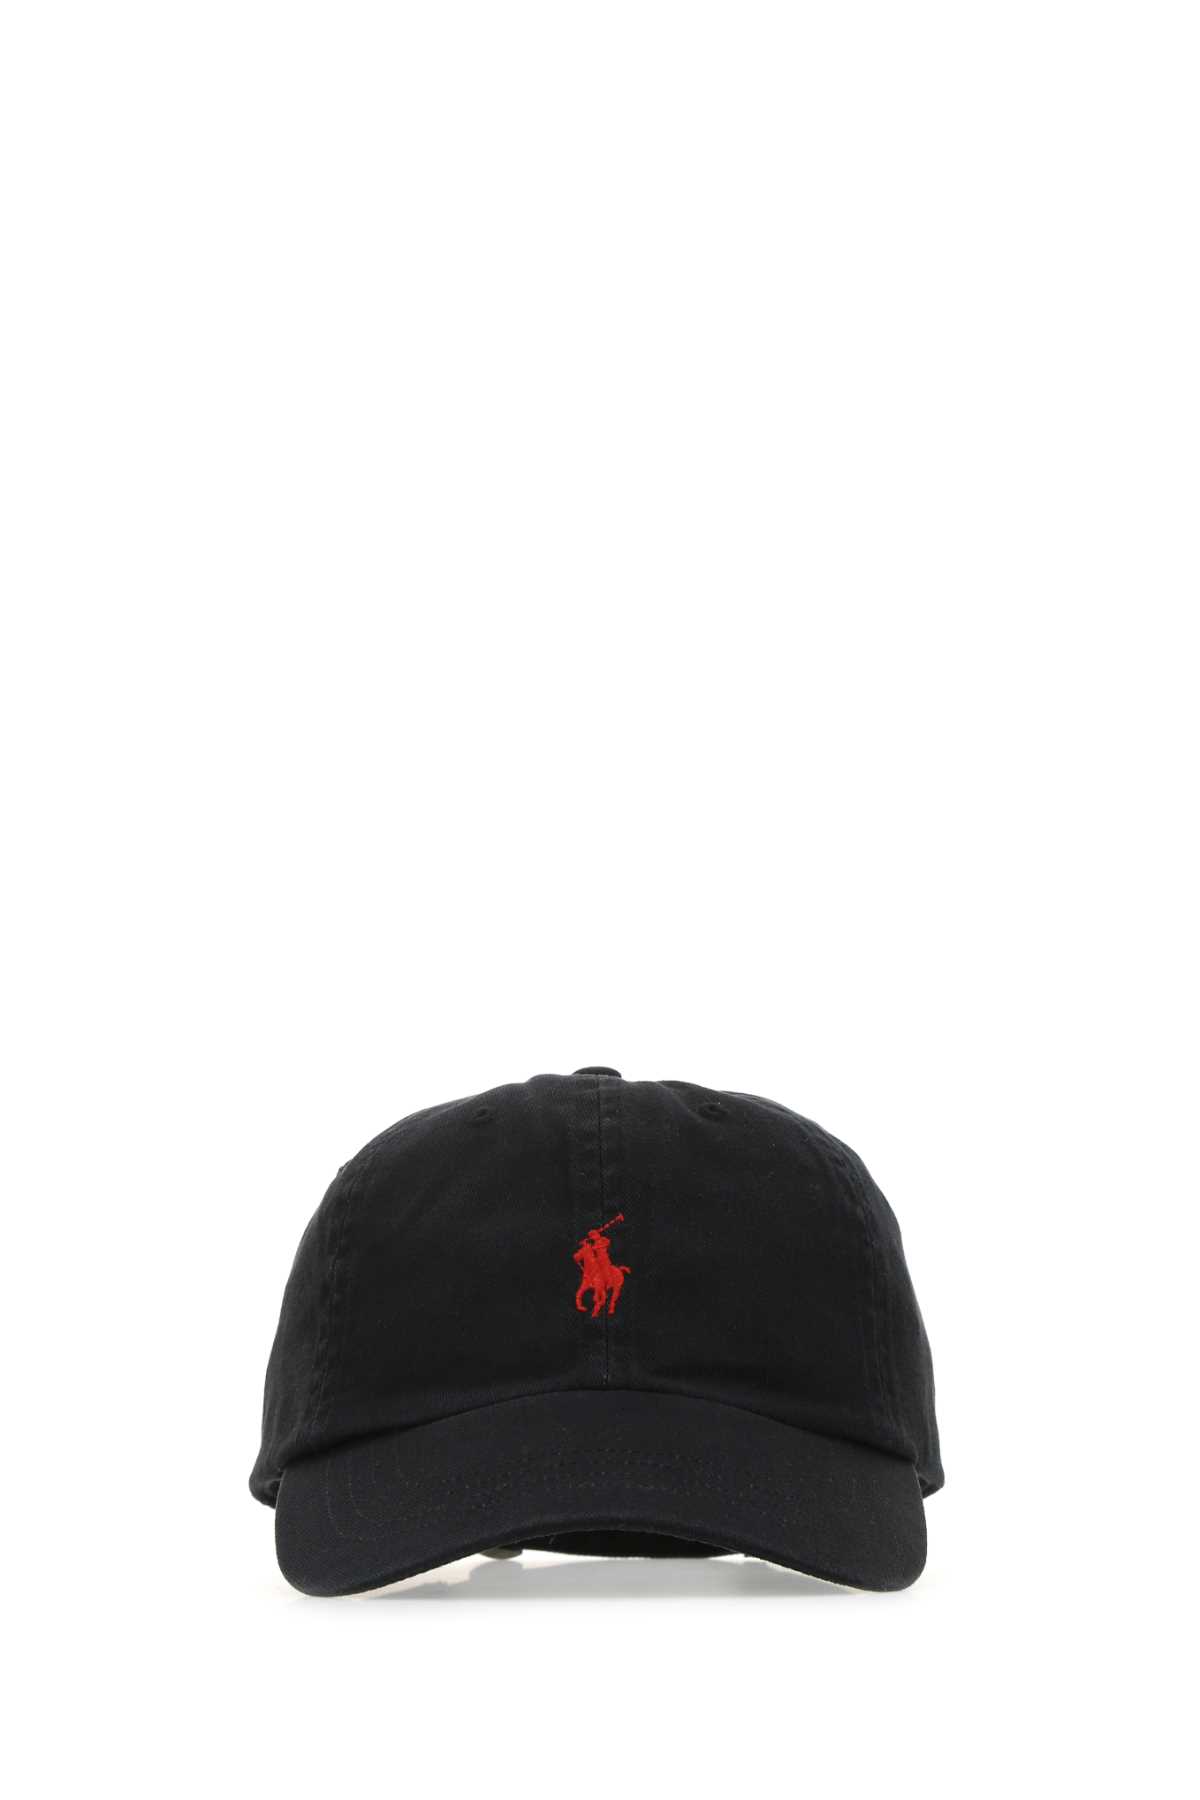 Shop Polo Ralph Lauren Black Cotton Baseball Cap